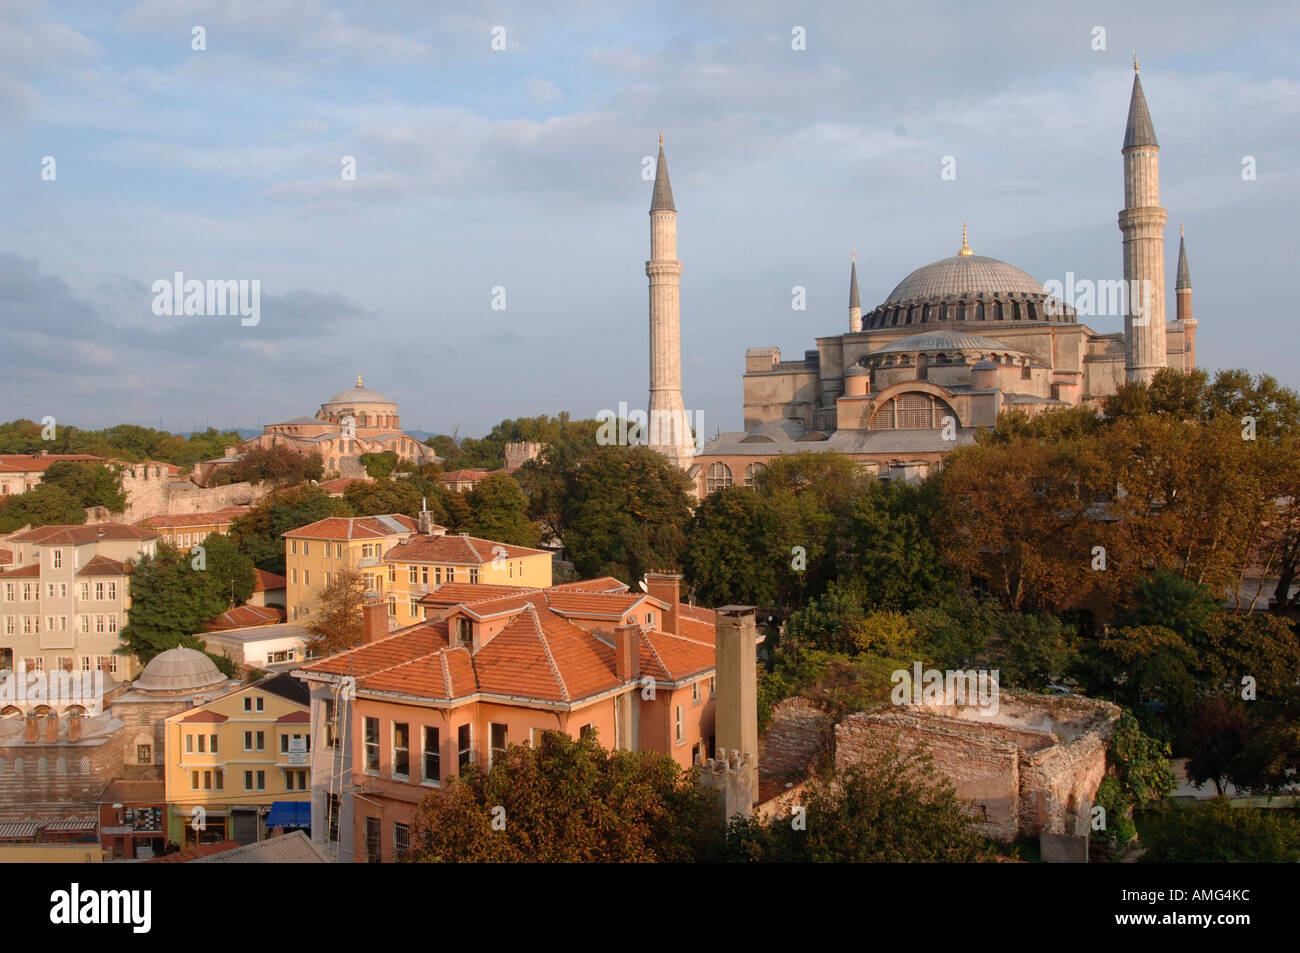 La Turquie, Istanbul, Altstadthäuser vor der Sainte-sophie, die der Kuppel liens Irenenkirche Banque D'Images